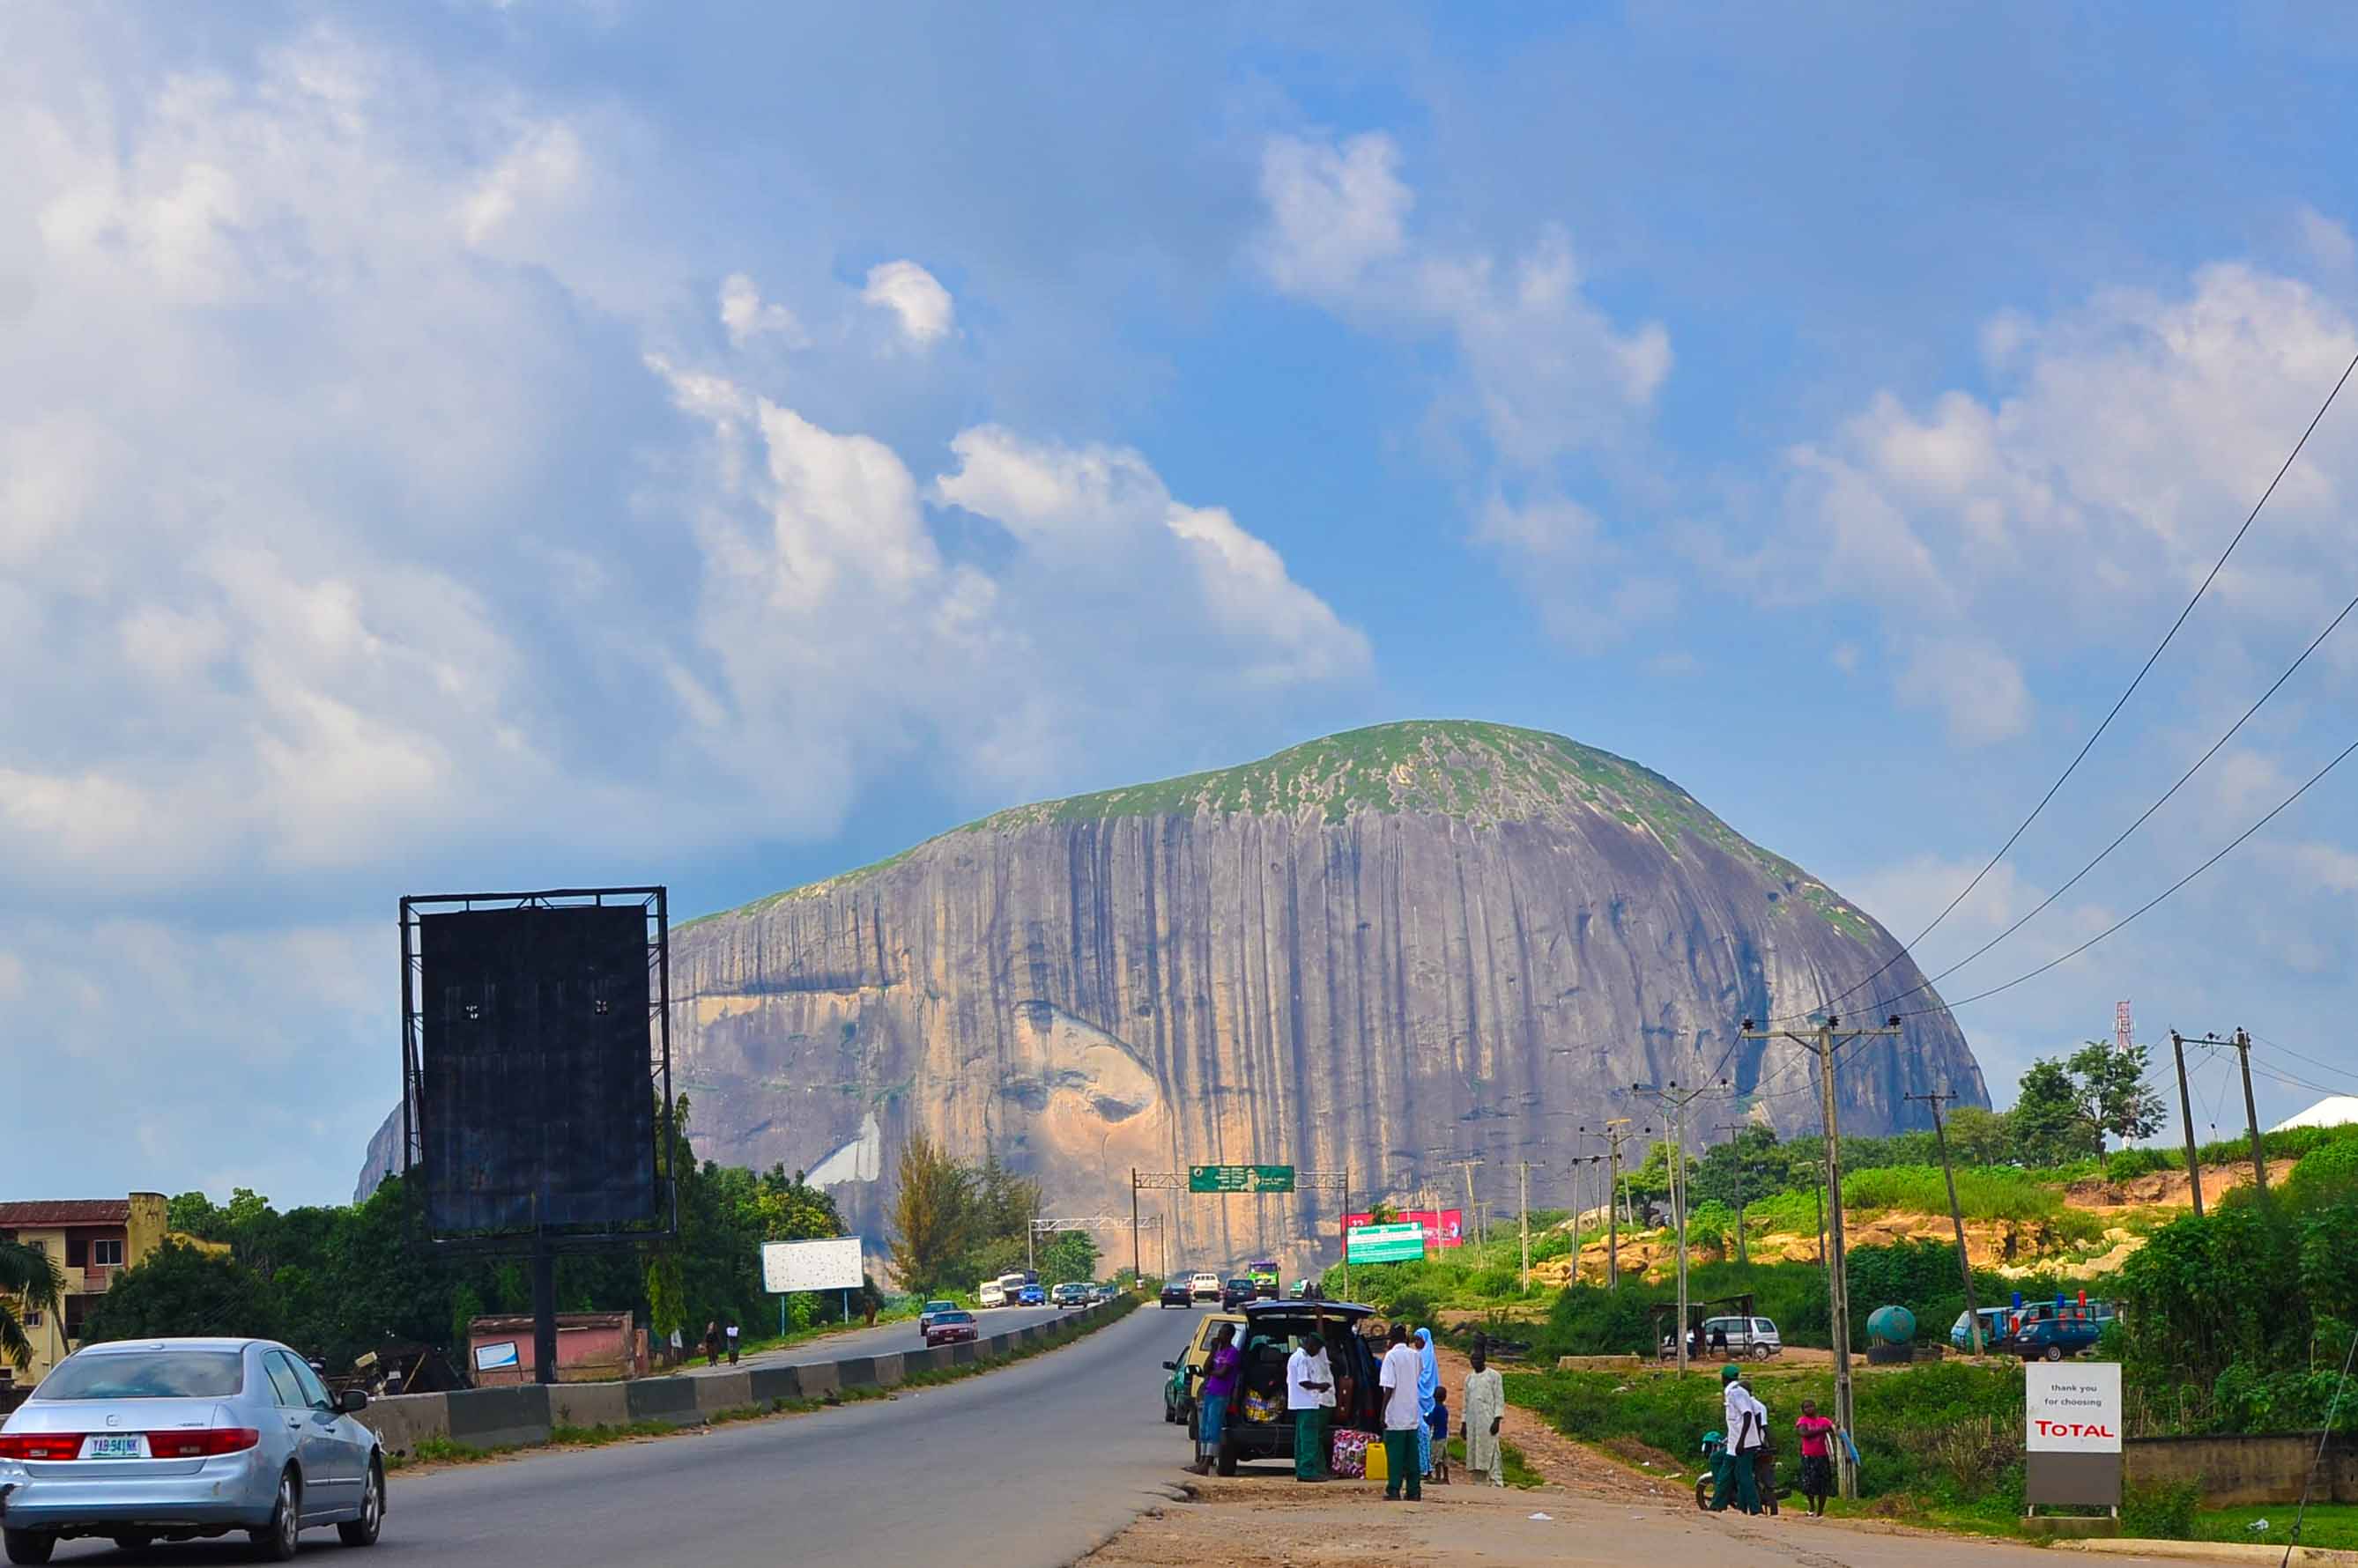 Zuma Rock – Abuja, Nigeria - Atlas Obscura